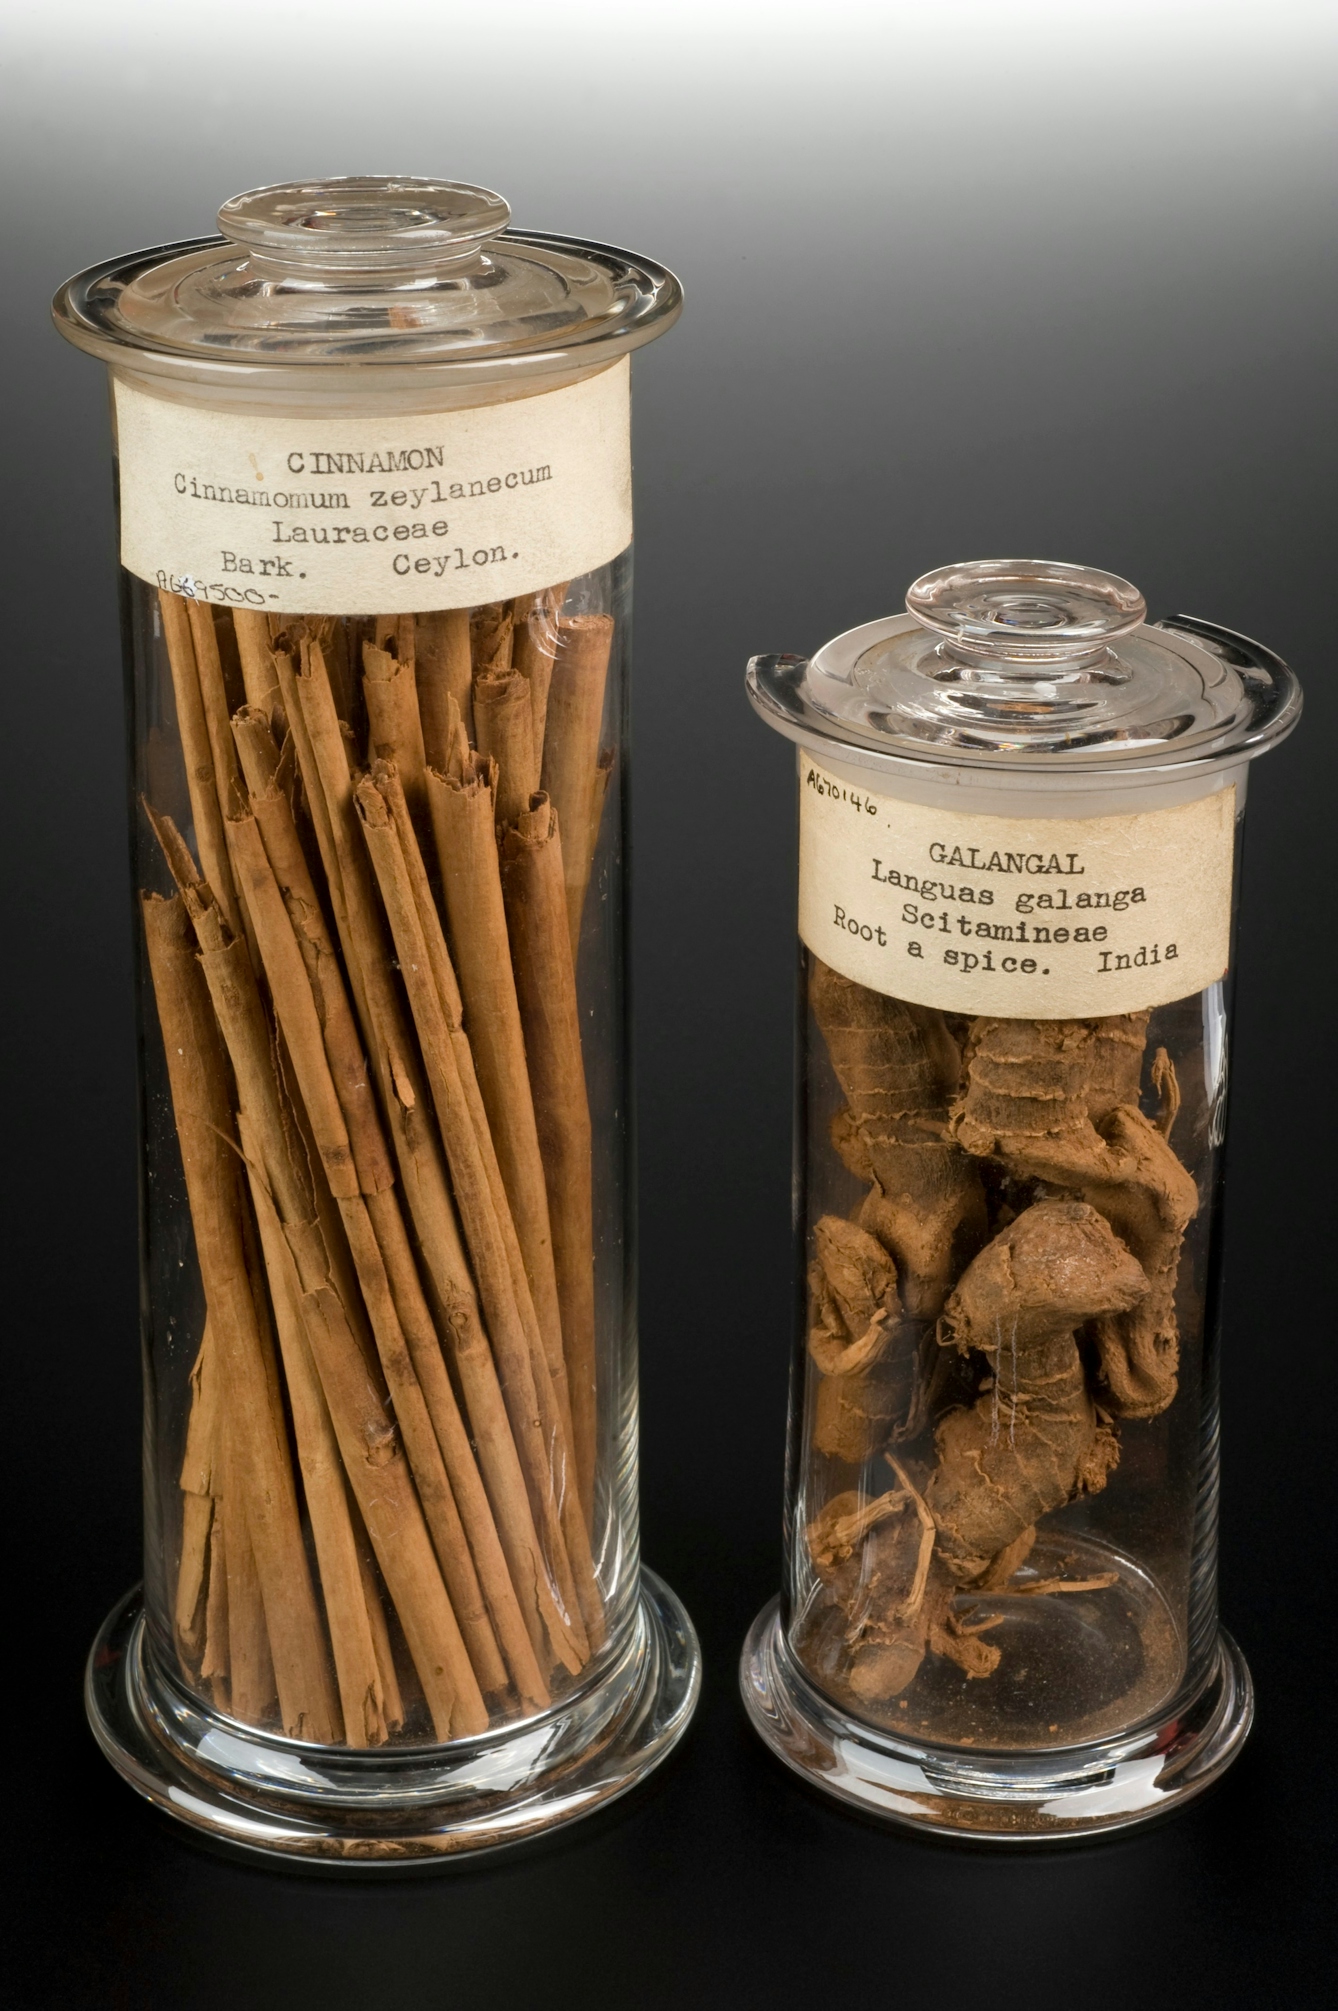 Sample of cinnamon bark, Sri Lanka, 1901-1940 in two jars